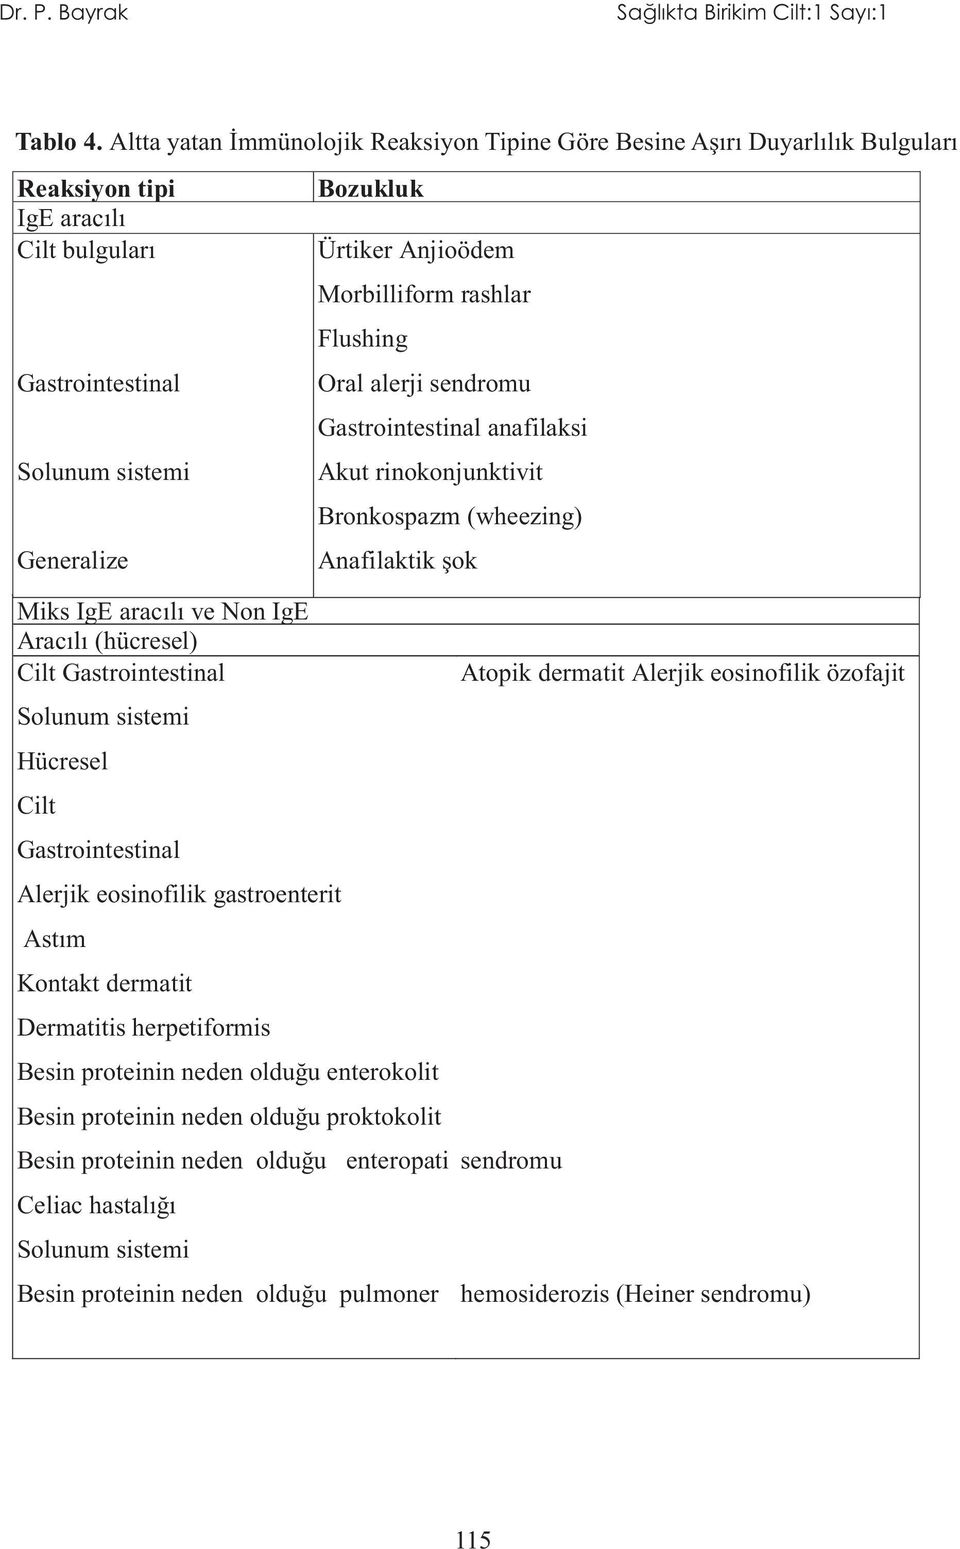 Morbilliform rashlar Flushing Oral alerji sendromu Gastrointestinal anafilaksi Akut rinokonjunktivit Bronkospazm (wheezing) Anafilaktik şok Miks IgE aracılı ve Non IgE Aracılı (hücresel) Cilt